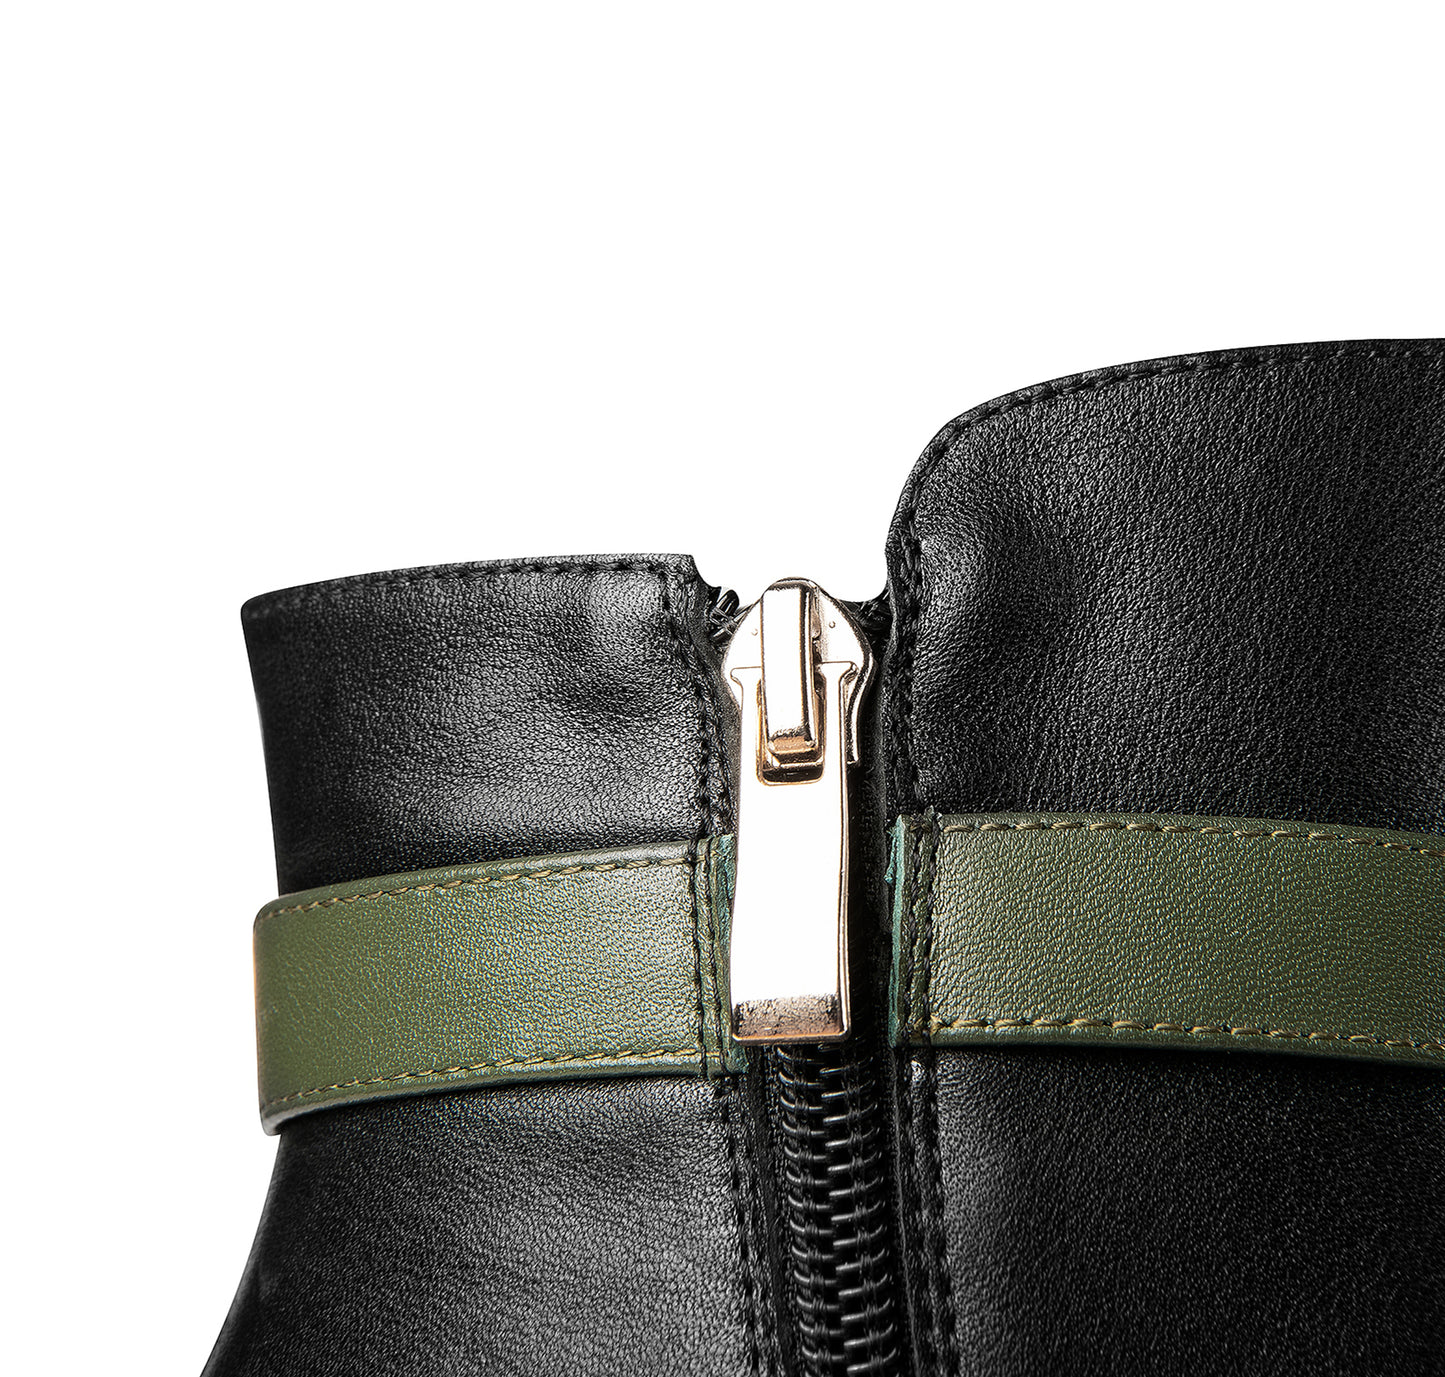 TinaCus Women's Genuine Leather Handmade Stylish Chunky Heel Side Zip Up Belt Design Ankle Booties